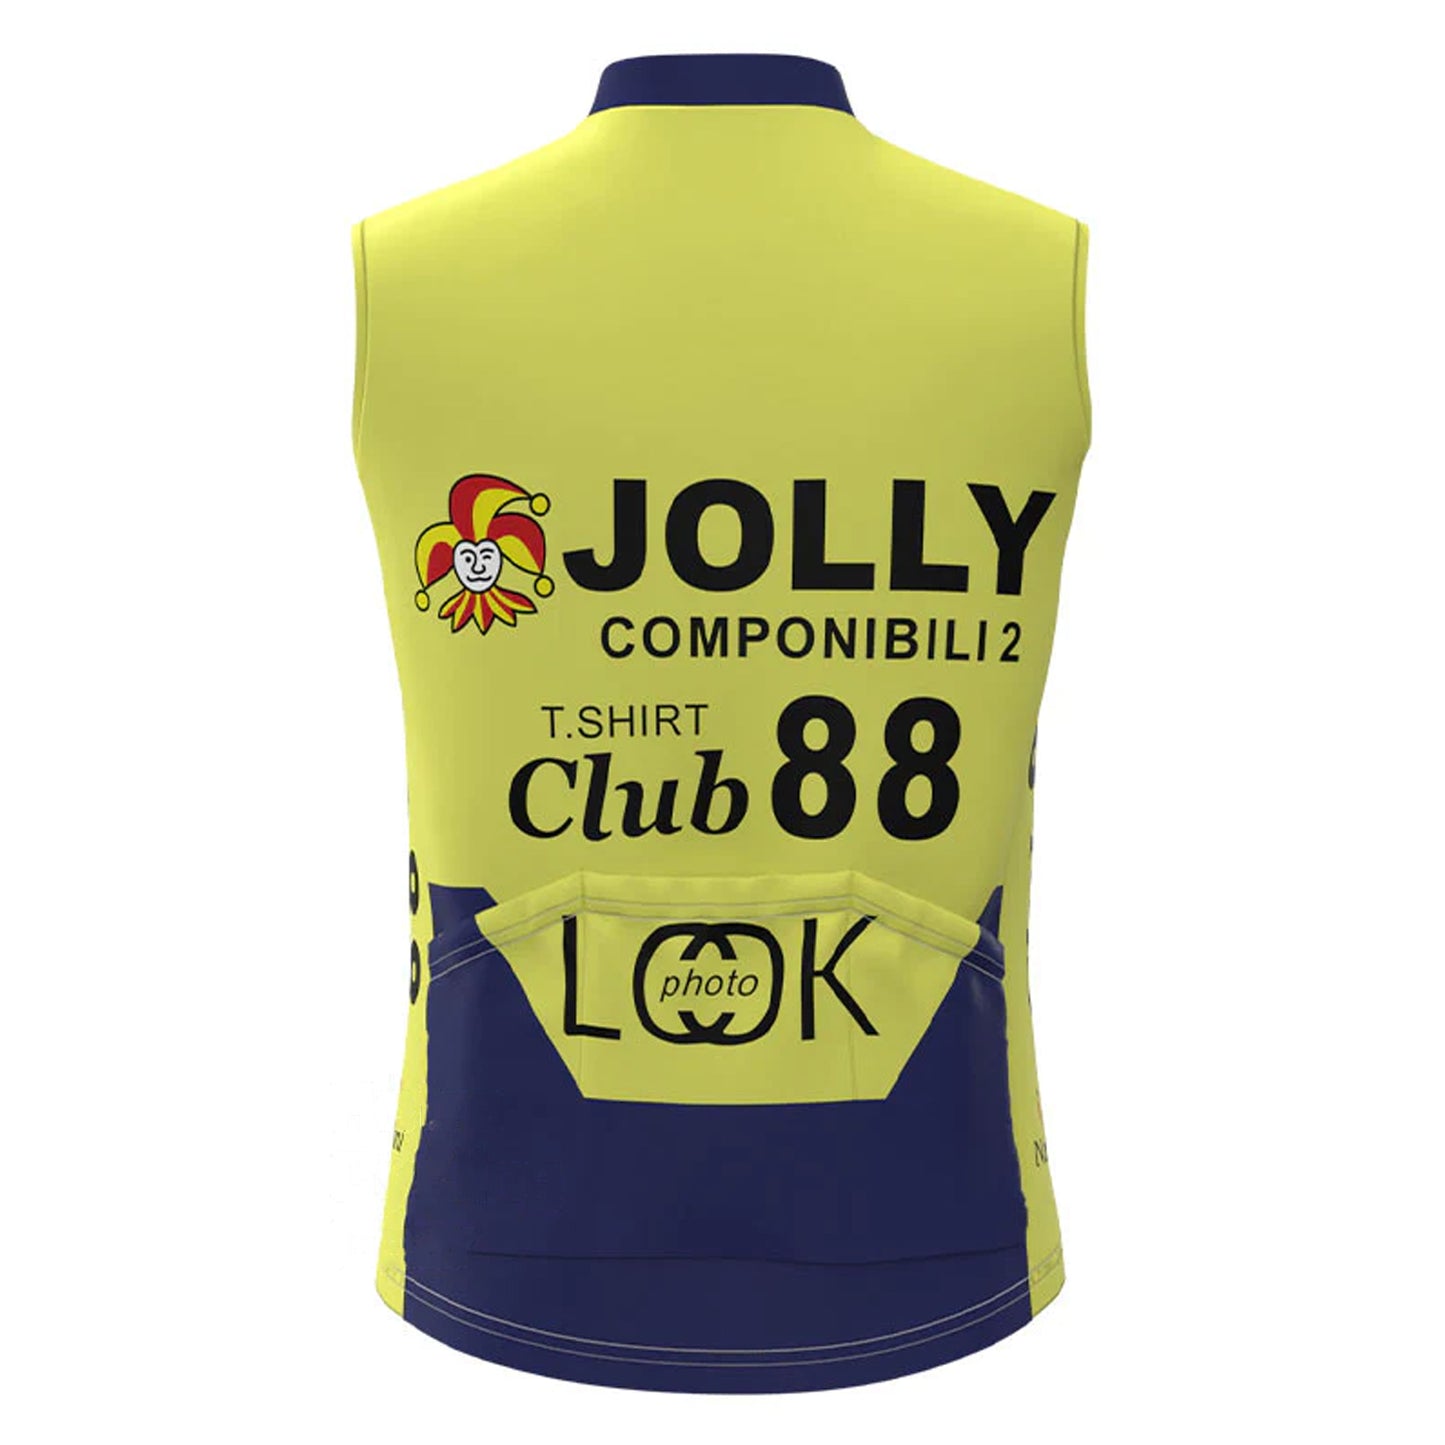 Jolly Componibili Yellow Retro MTB Cycling Vest